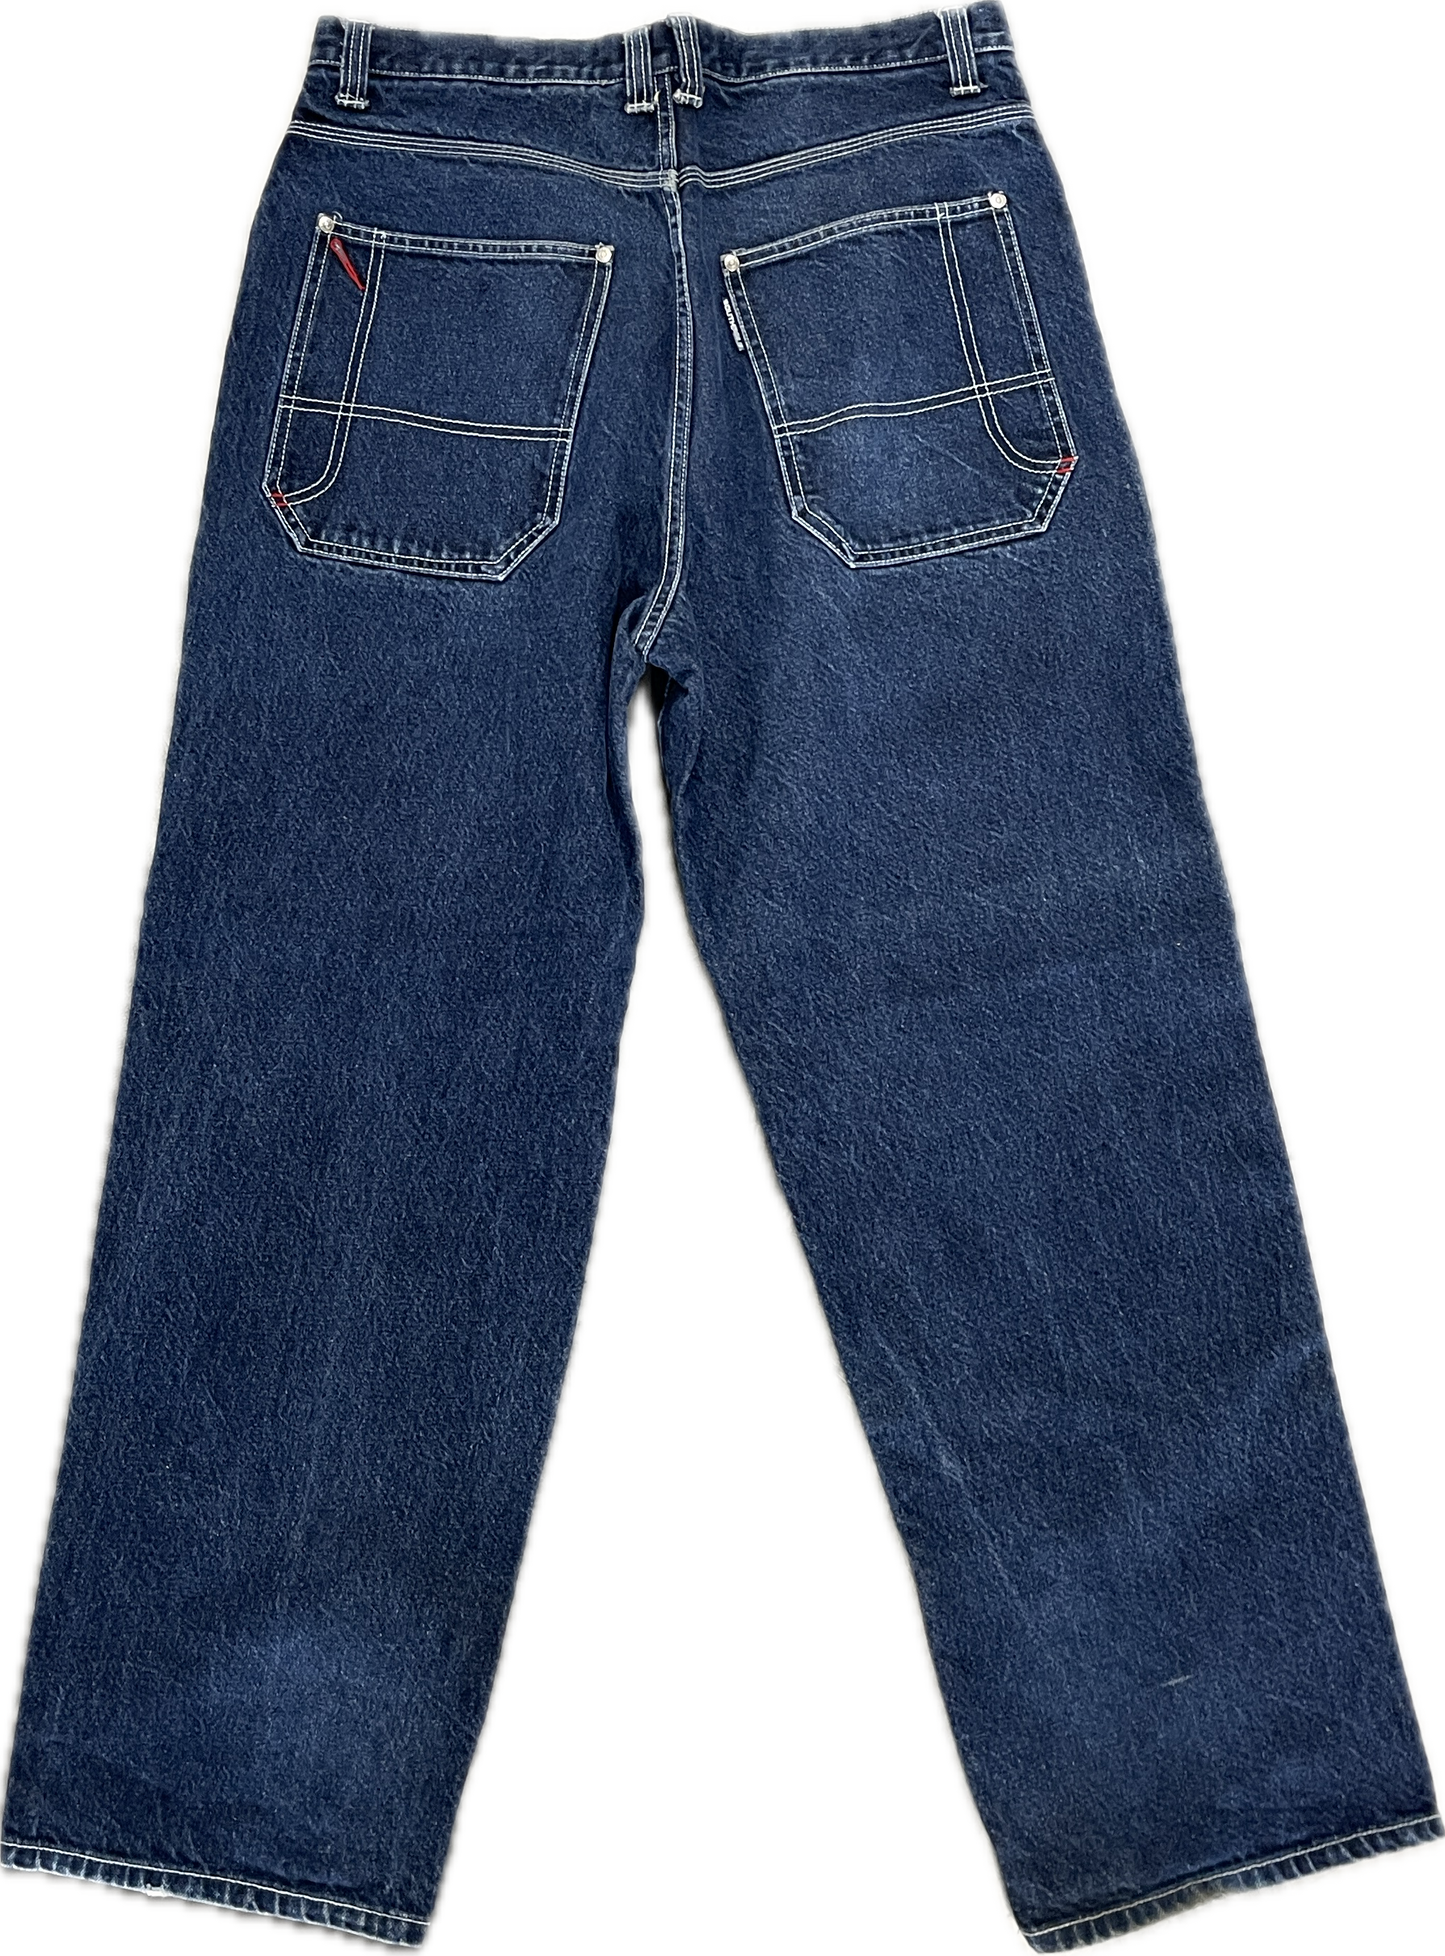 South Pole wide legged jeans (USED)